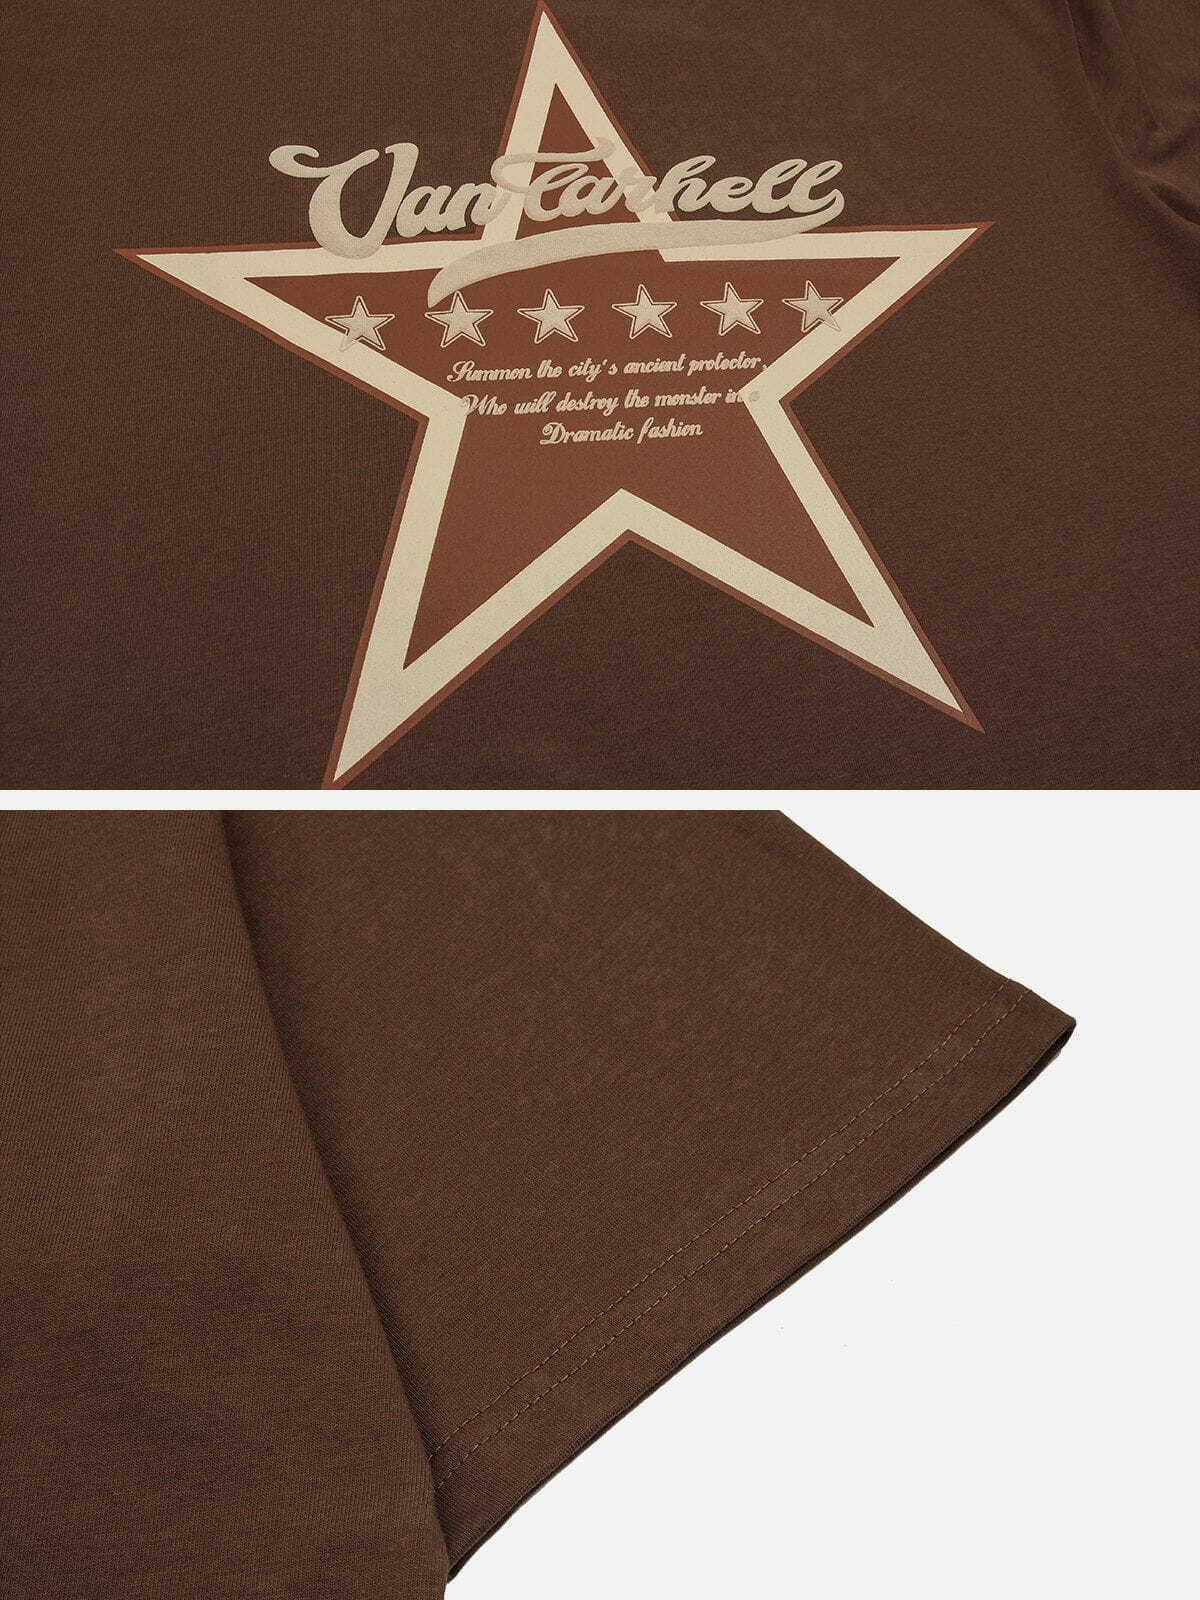 playful star print tee edgy  retro shirt for youthful streetwear 1449